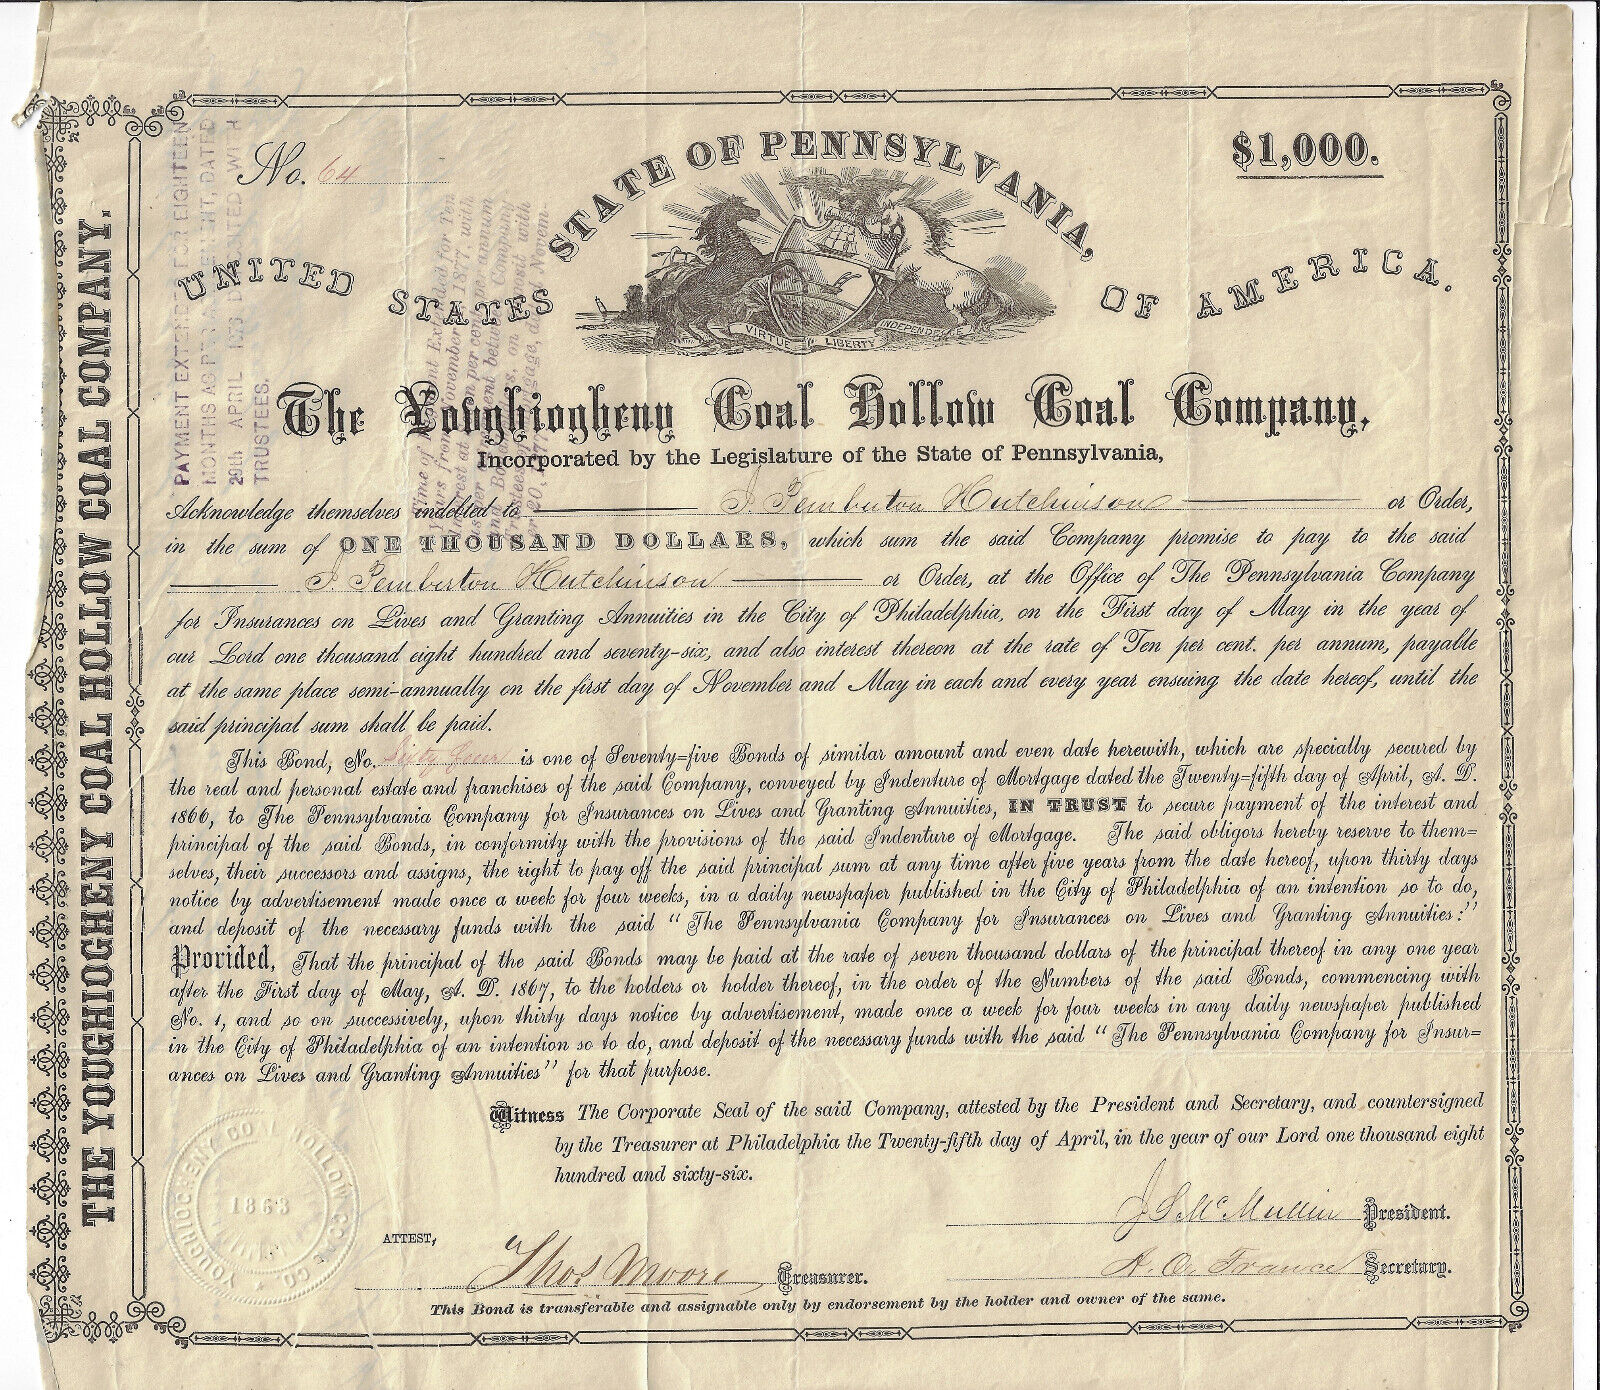 Pennsylvania 1866 Youghiogheny Coal Hollow Coal Company Bond Certificate #64